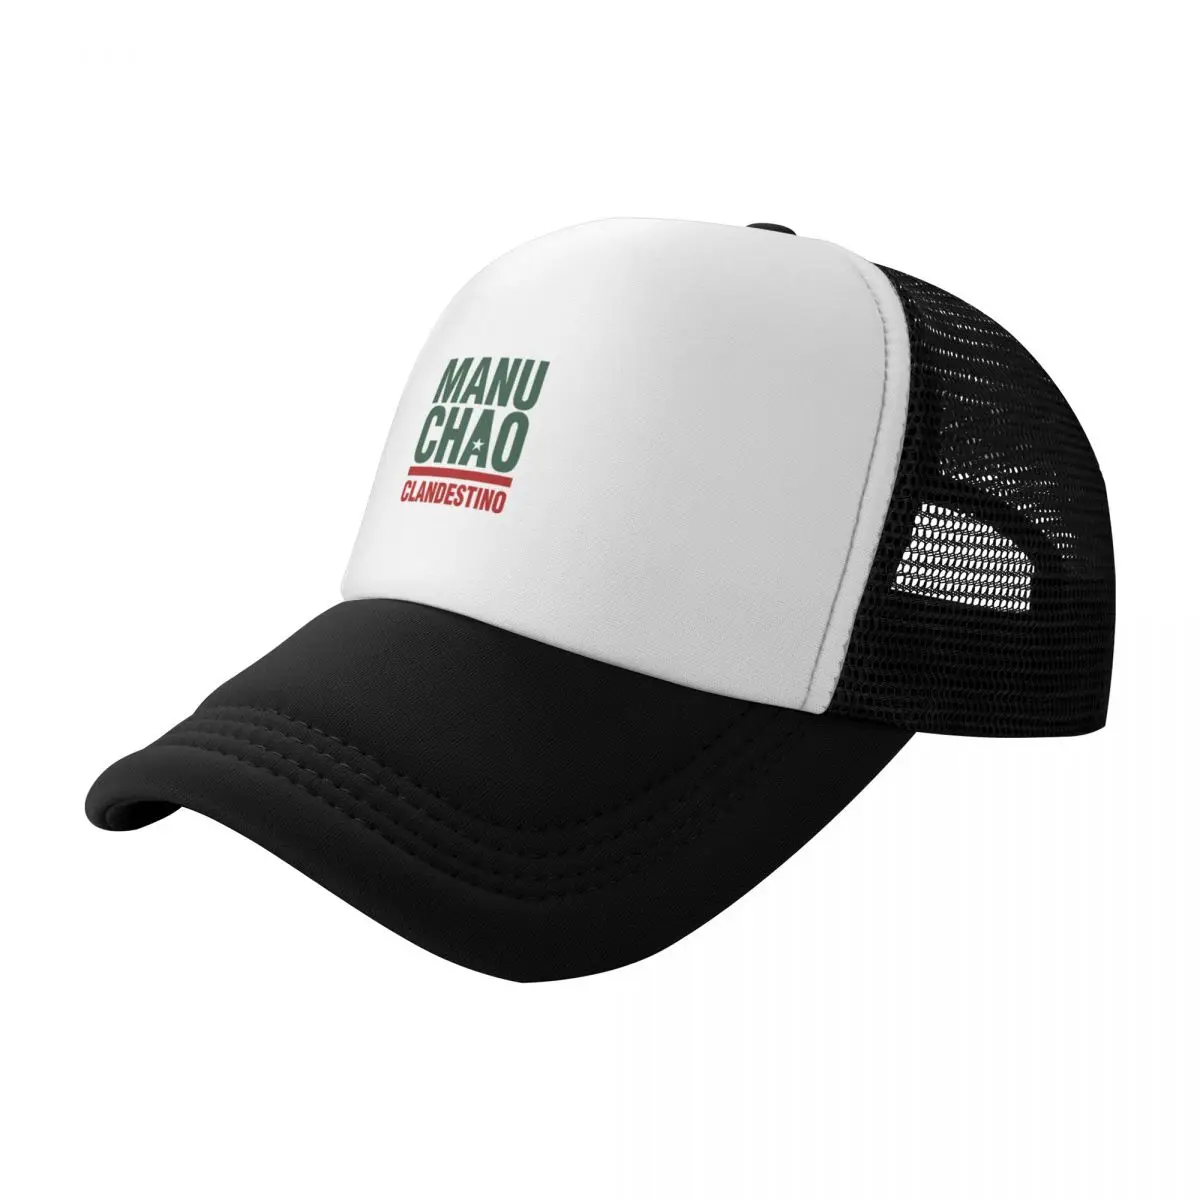 

Manu Chao Clandestino Logo Baseball Cap black Luxury Brand Hat Baseball Cap Sun Hat For Children Men's Caps Women's